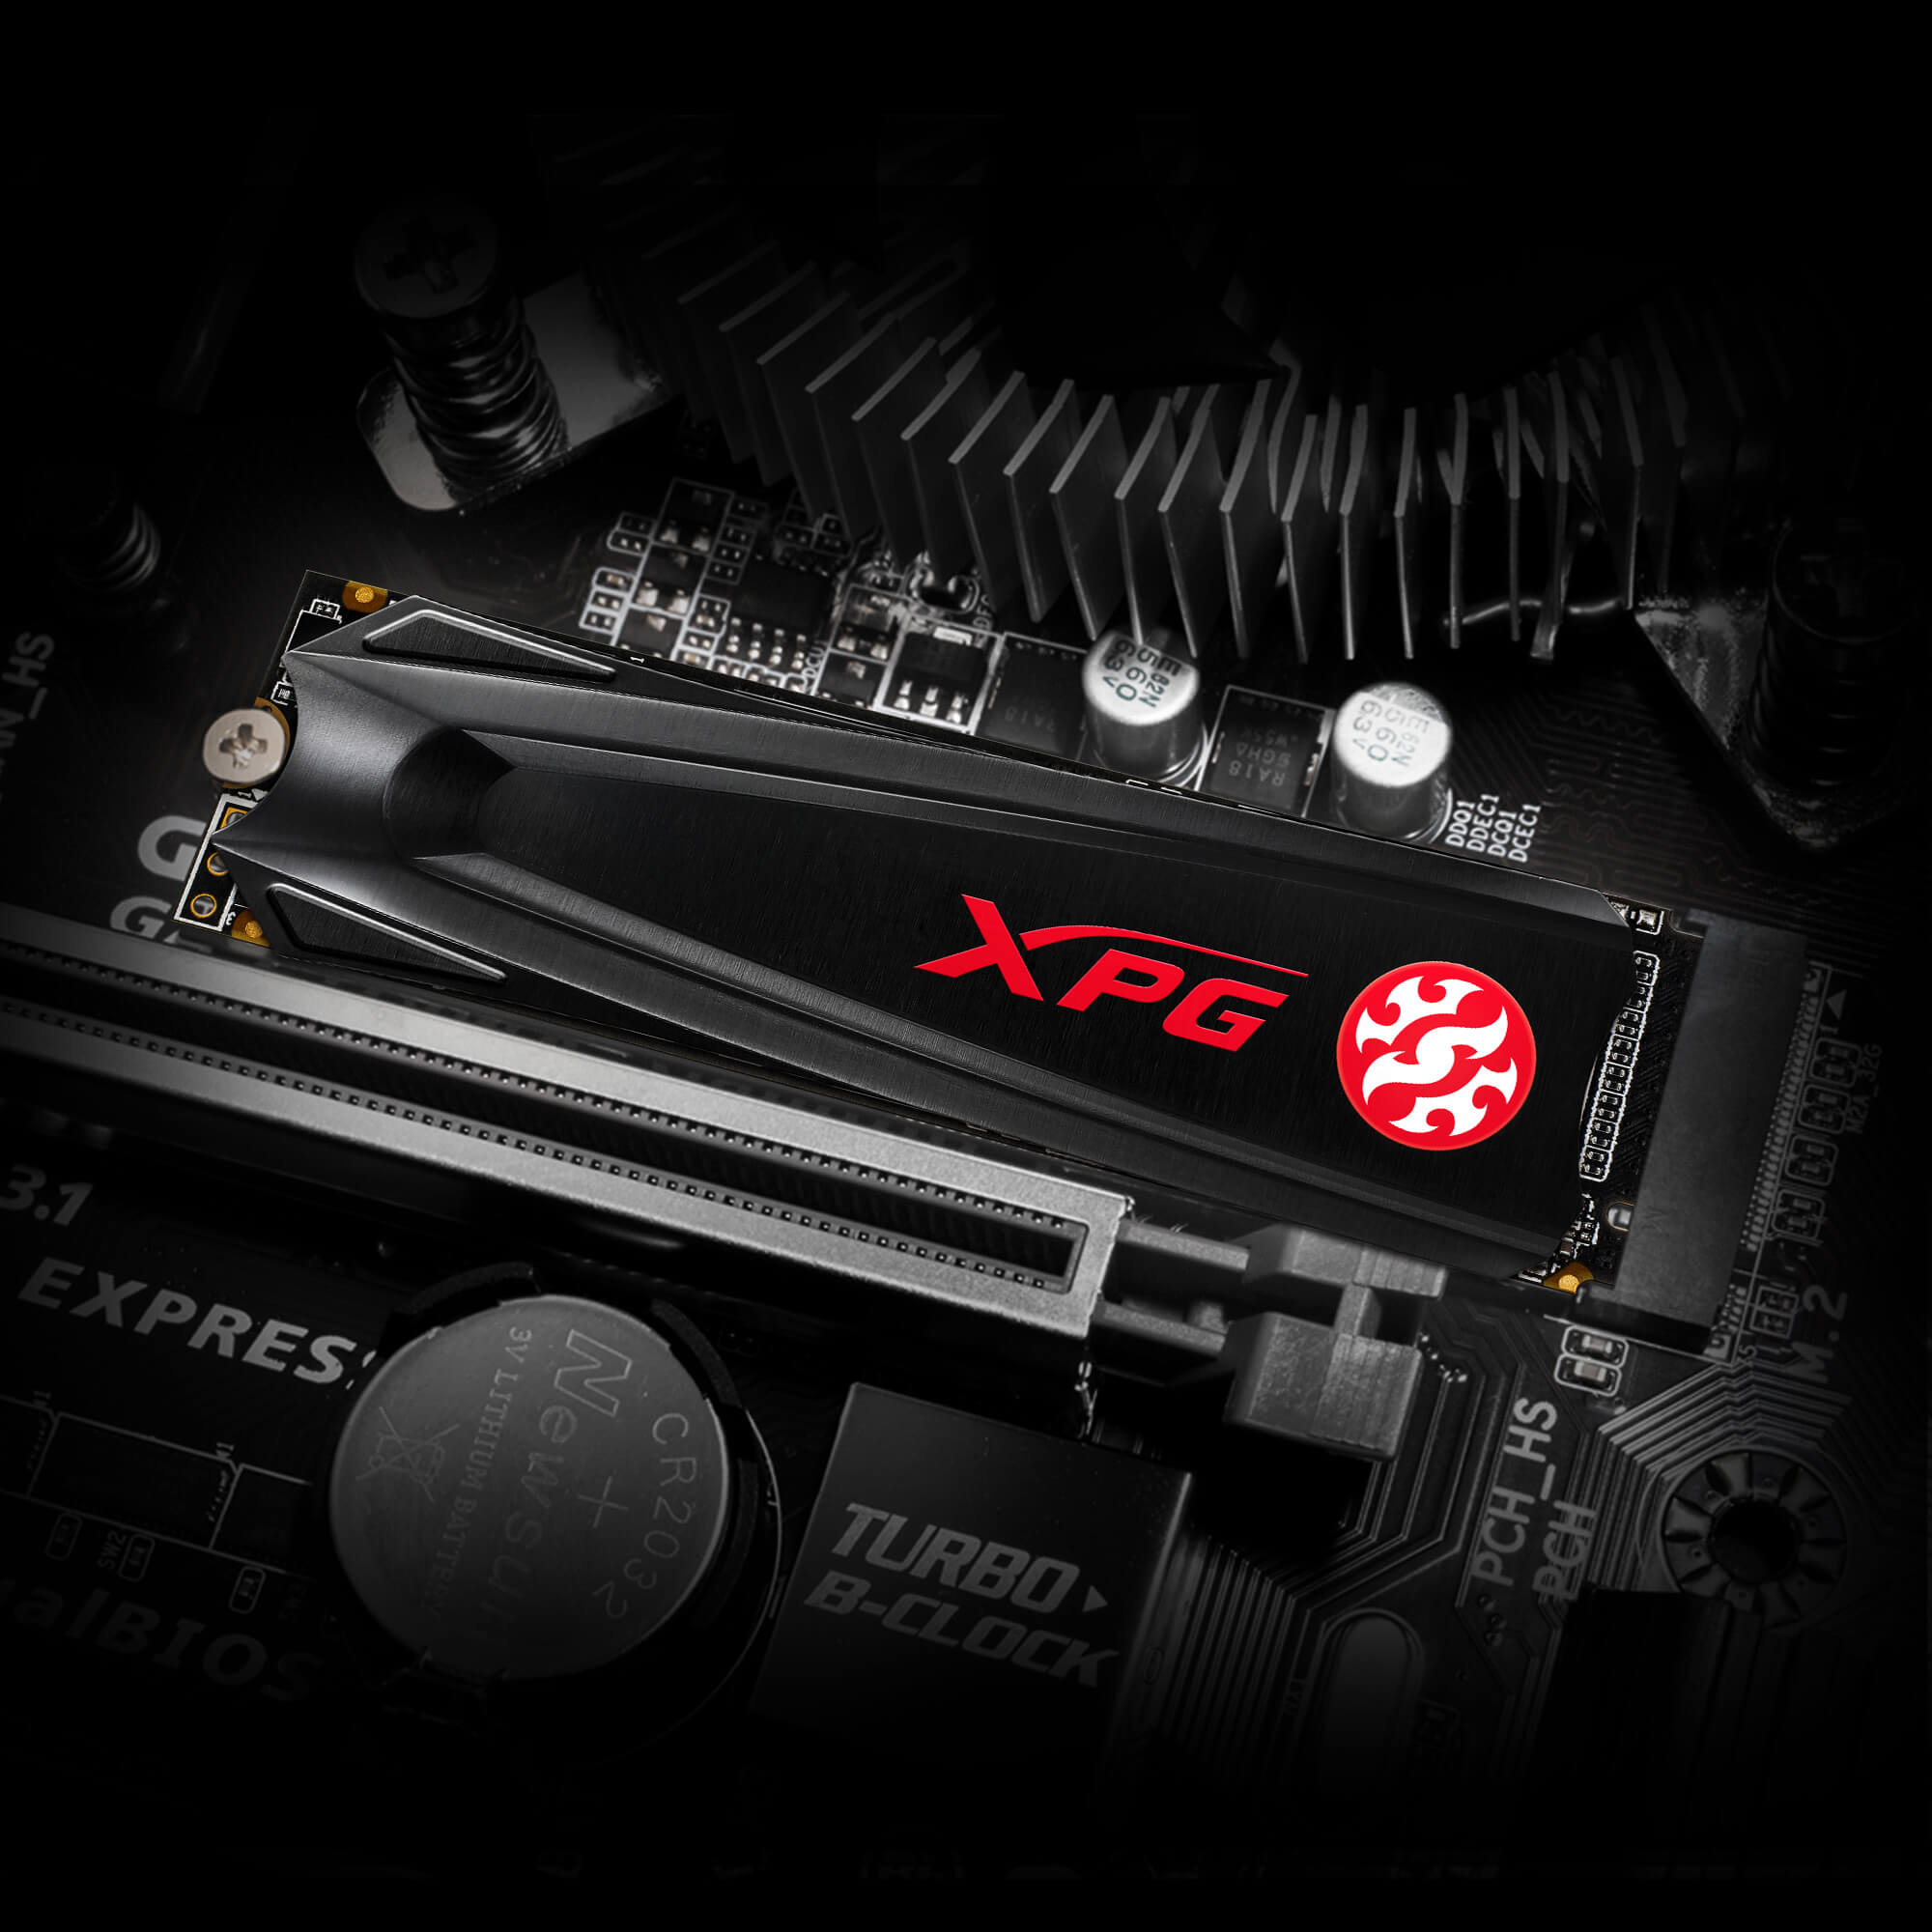 XPG GAMMIX S5 512GB PCIe Gen3x4 M.2 2280 SSD - Dragon Master For Electronics